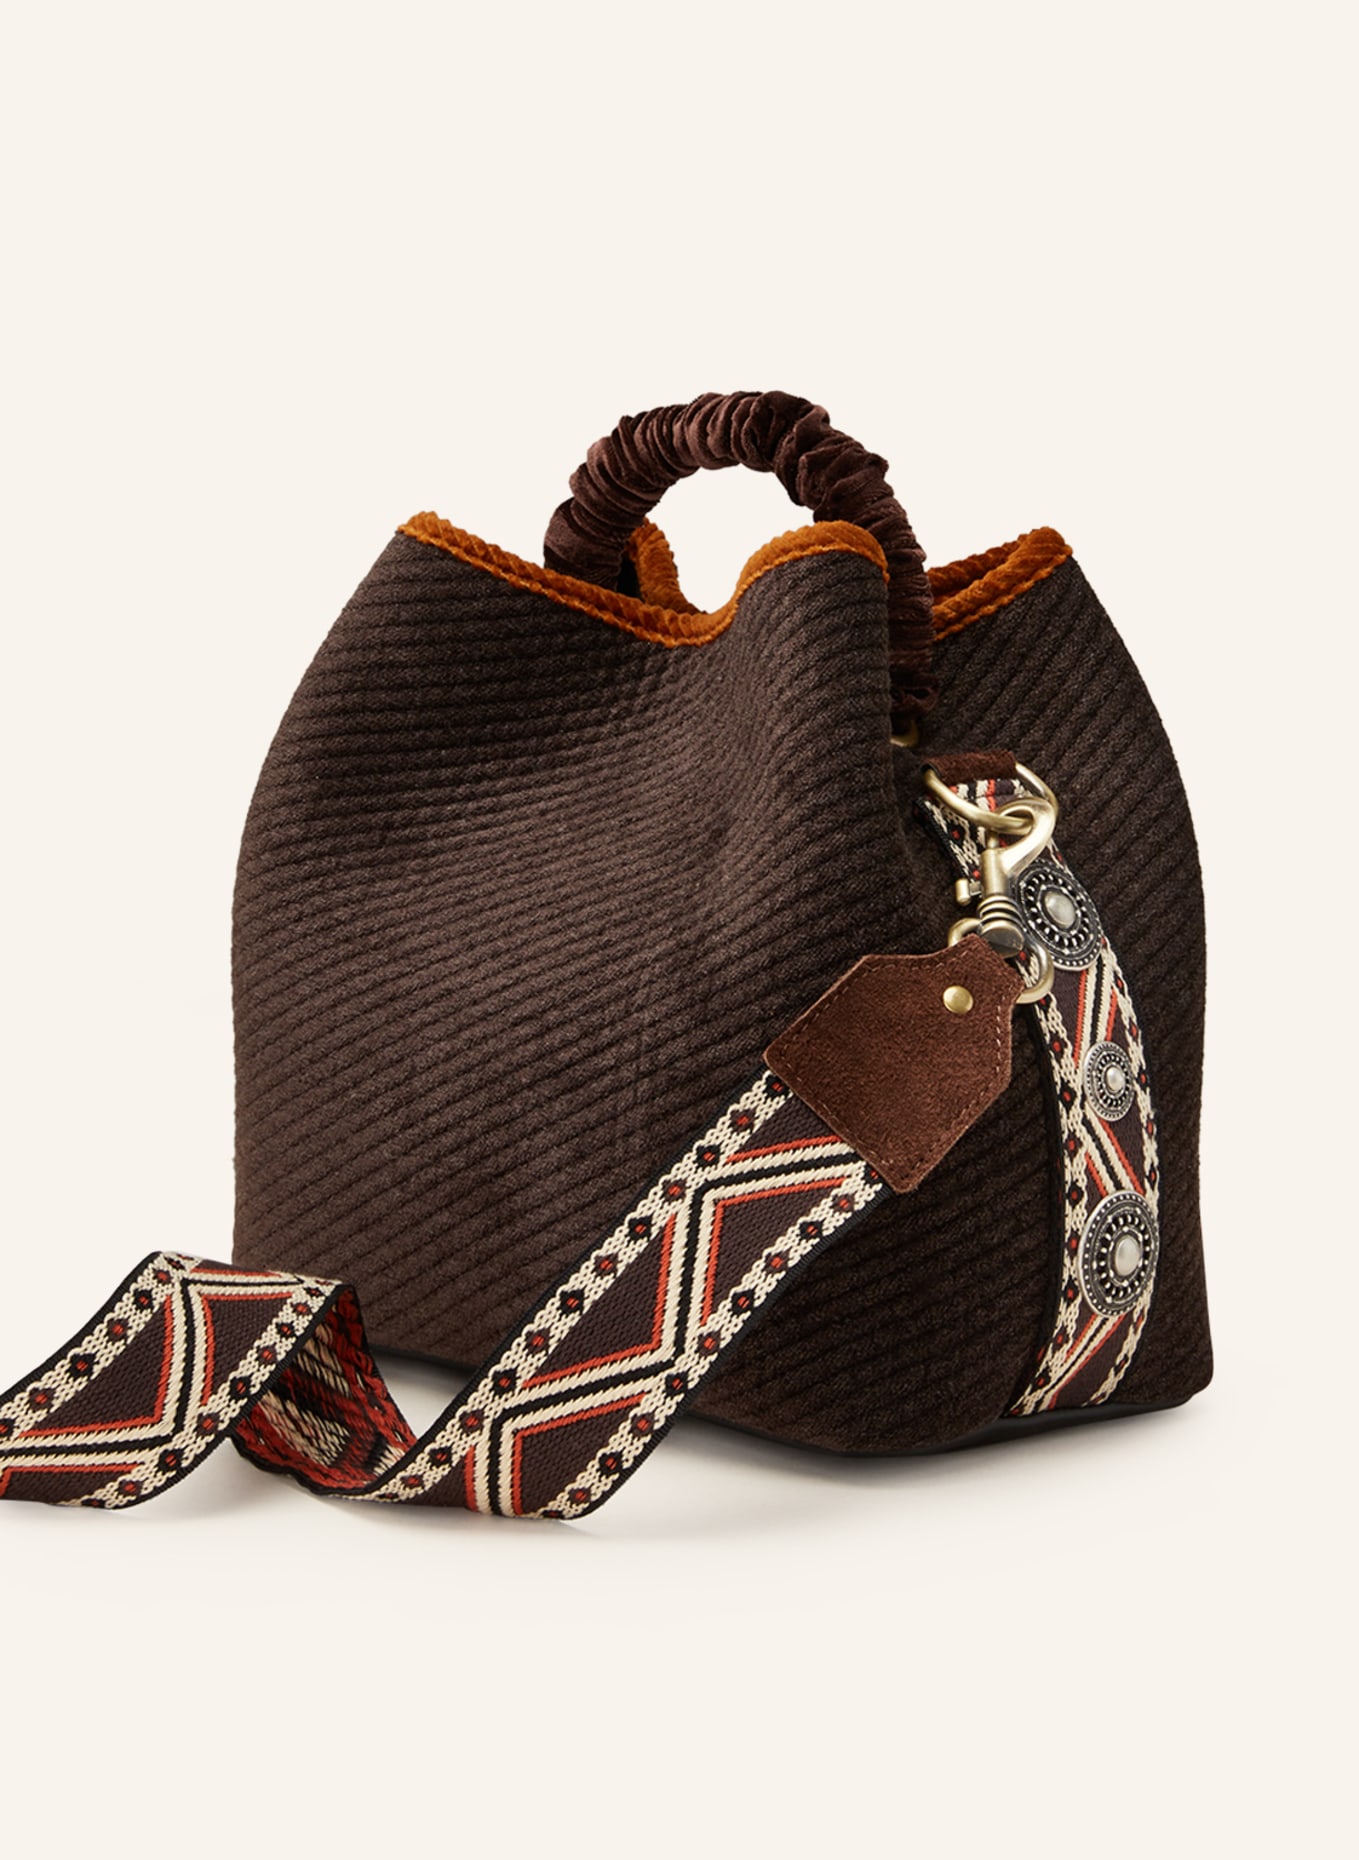 ViaMailBag Pouch bag CORAL TARTAN in brown/ dark brown/ light brown